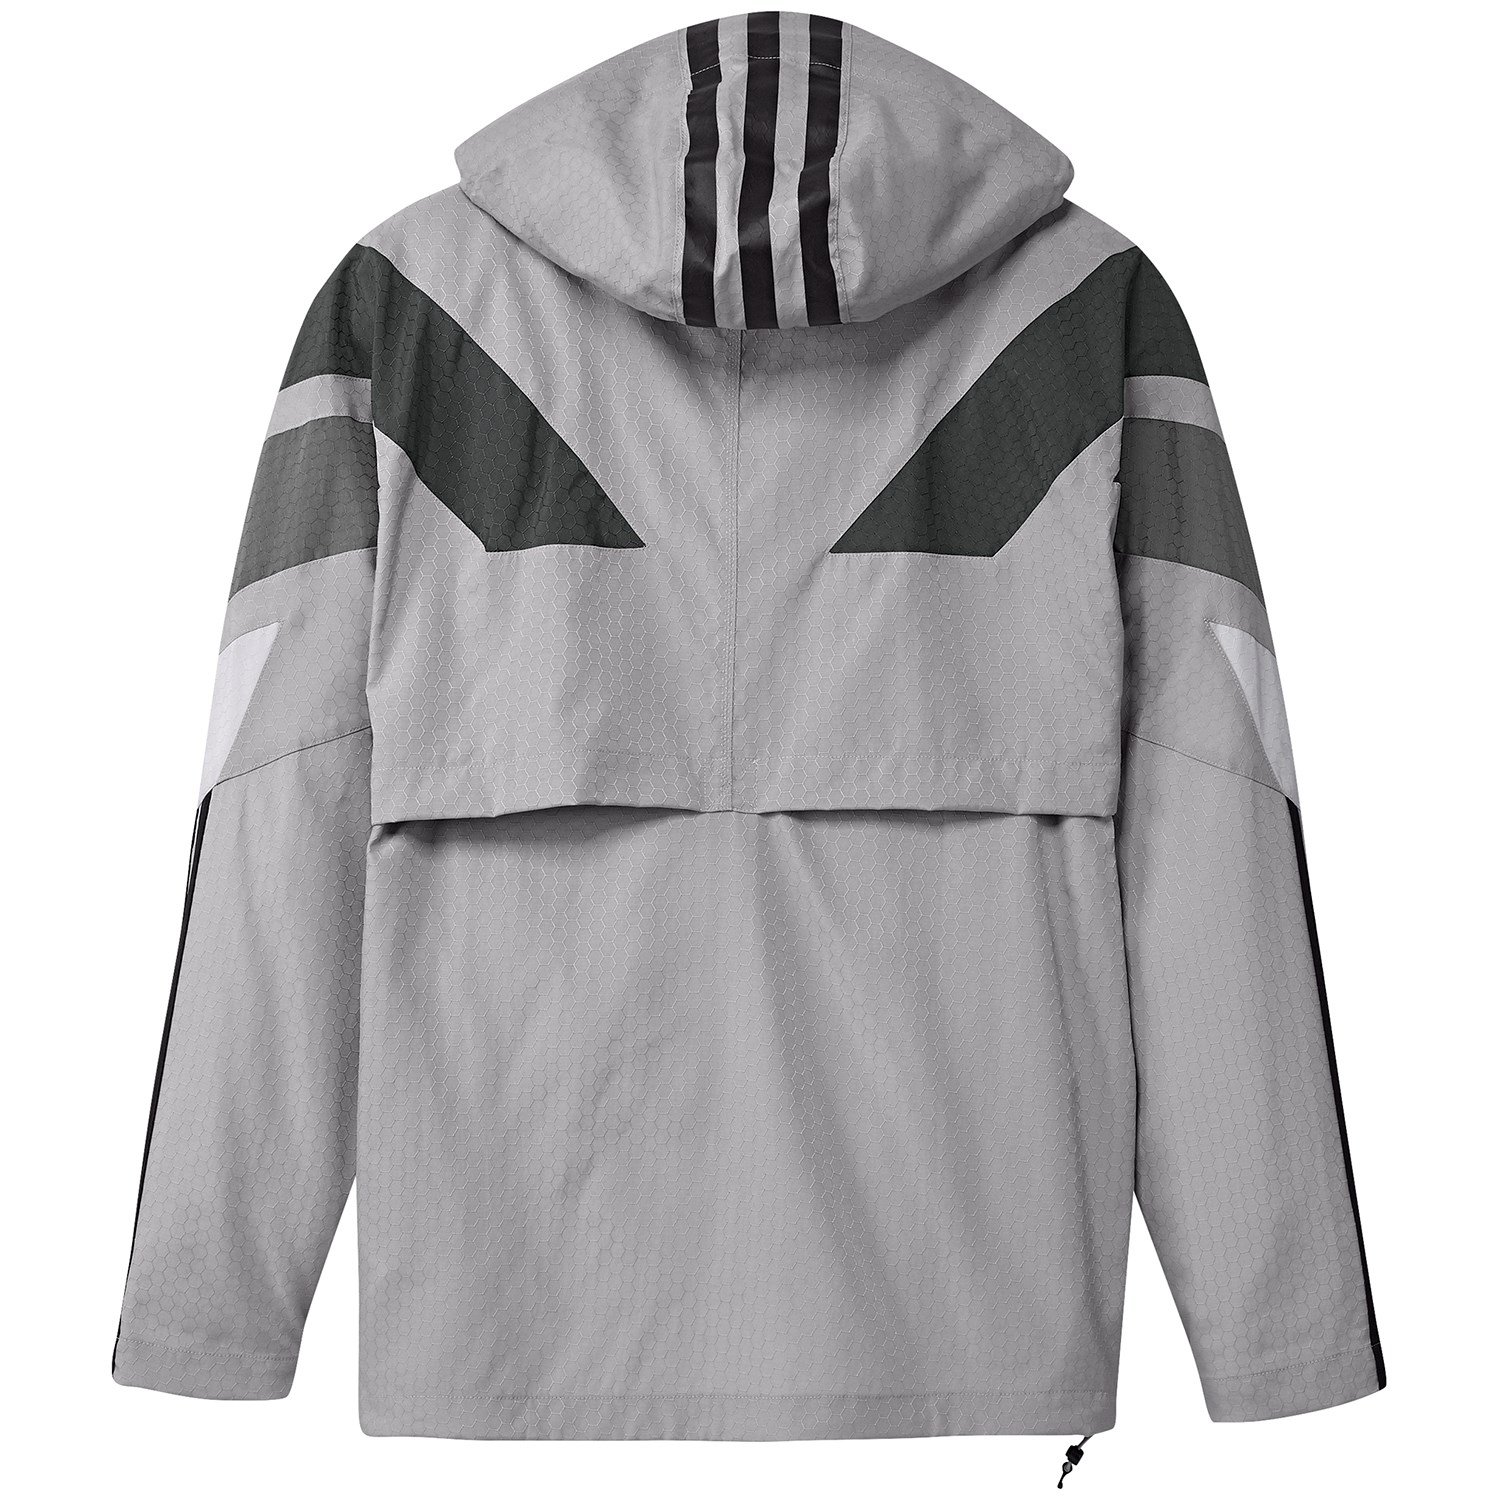 adidas 3st track jacket